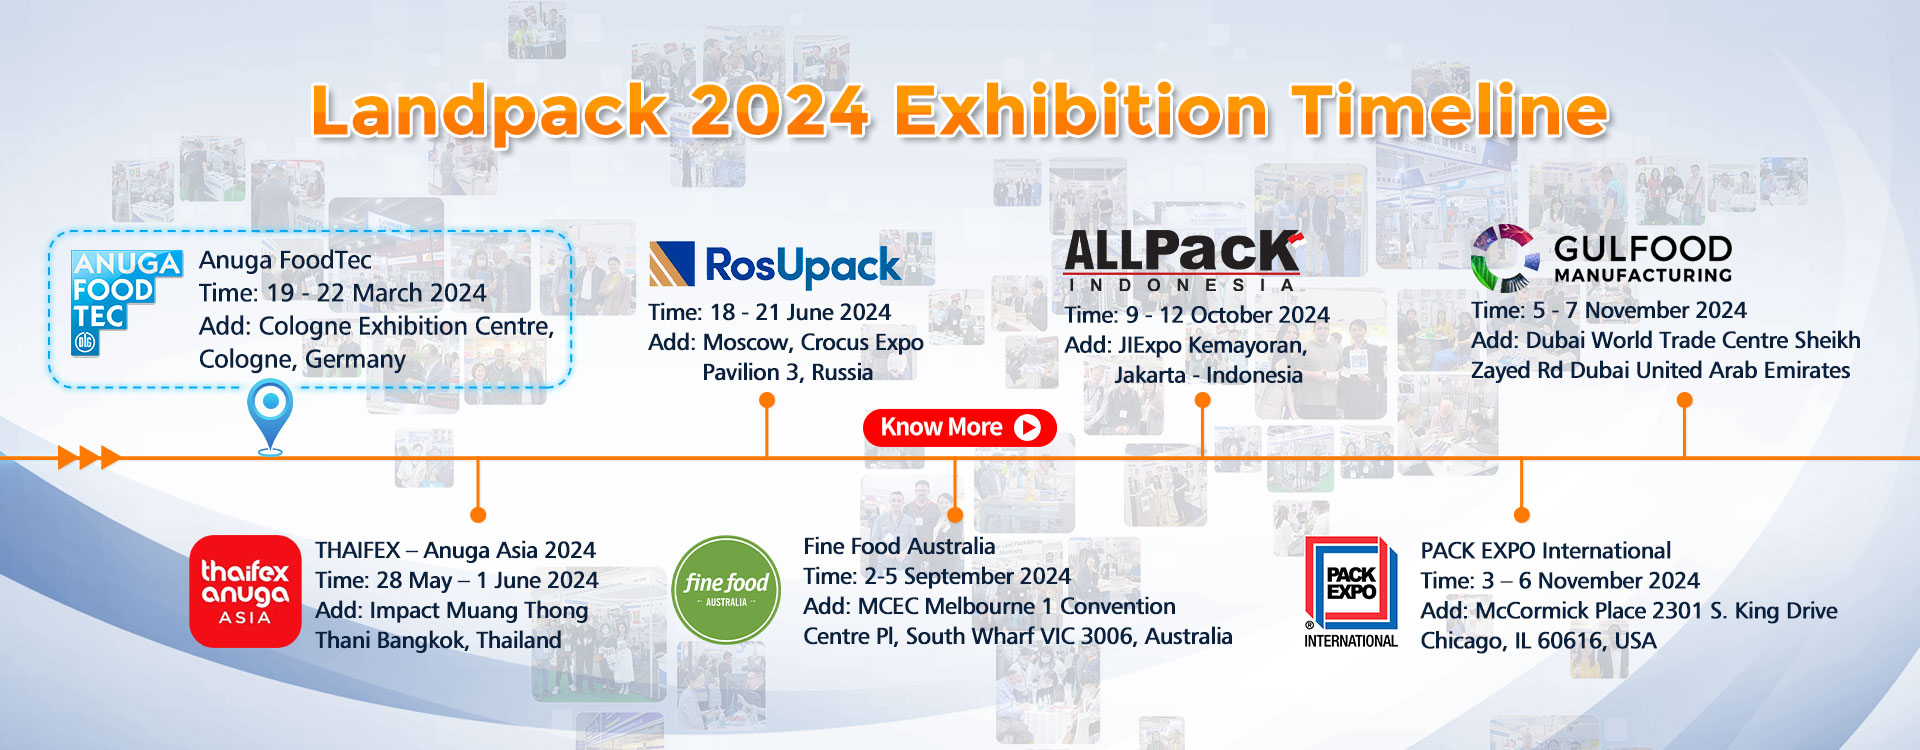 Landpack Exhibition Timeline In 2024